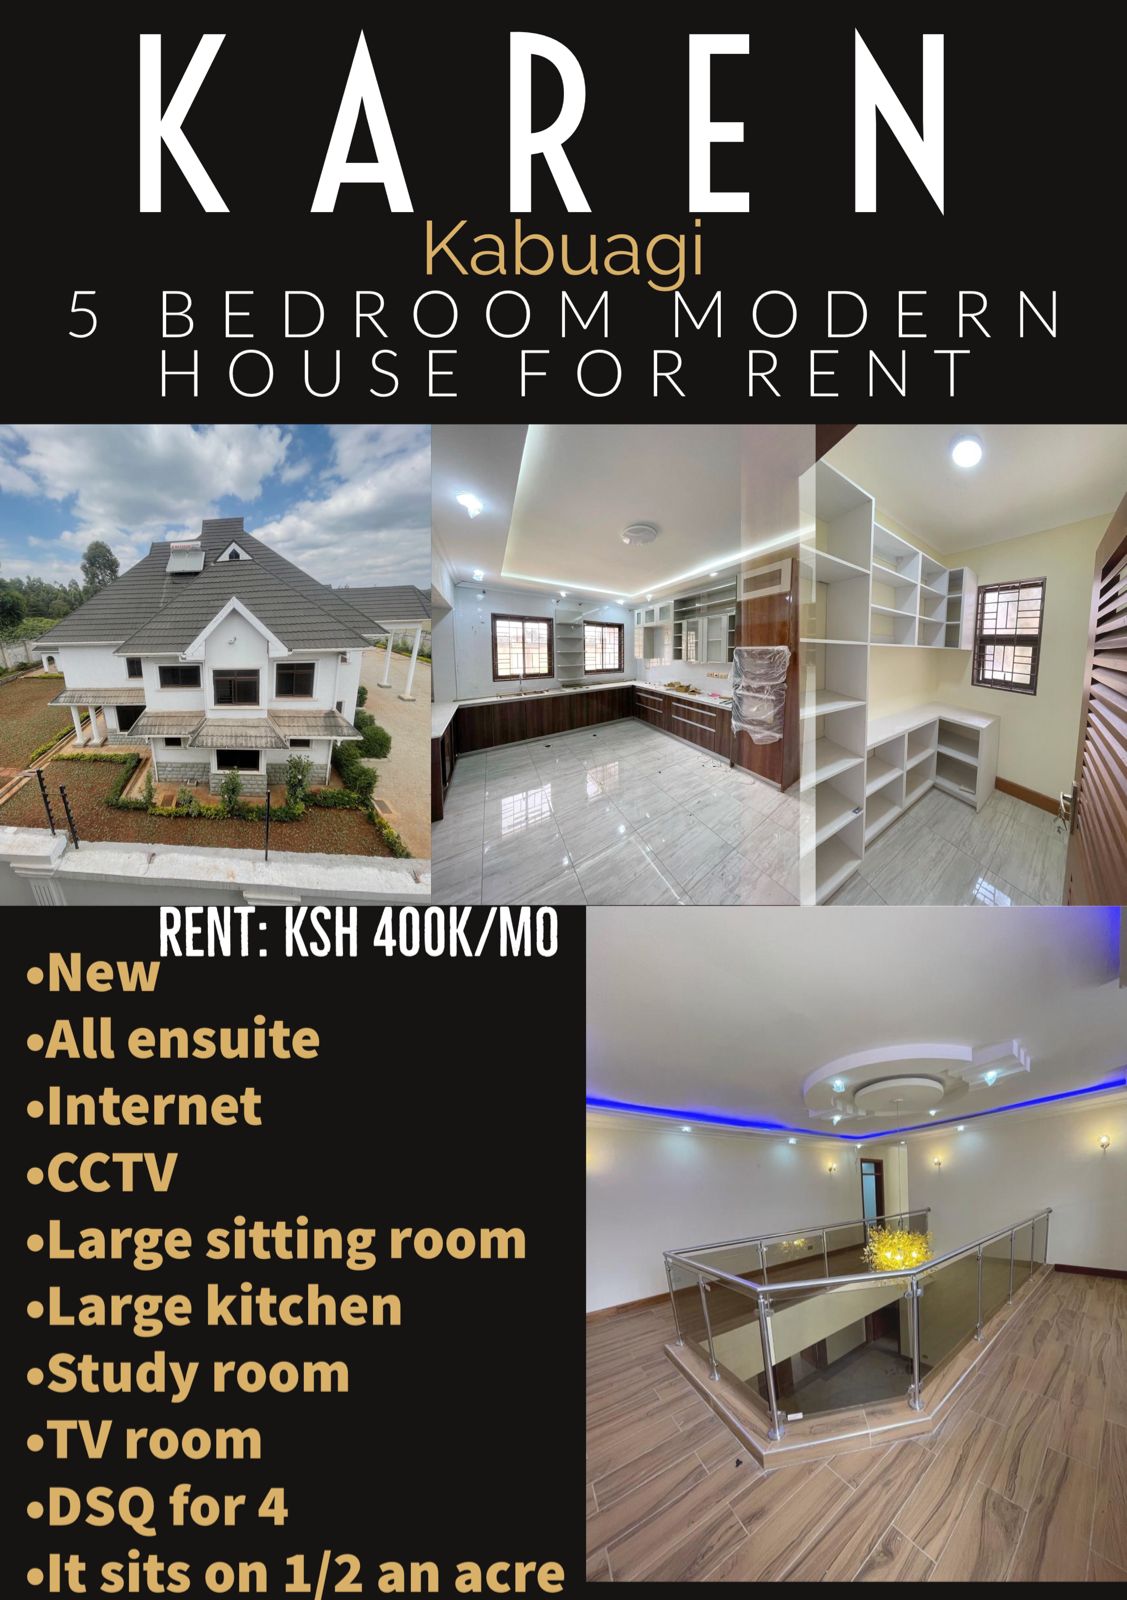 5 bedroom karen kabuagi modern new house with 4 dsq EXCLUSIVE For rent